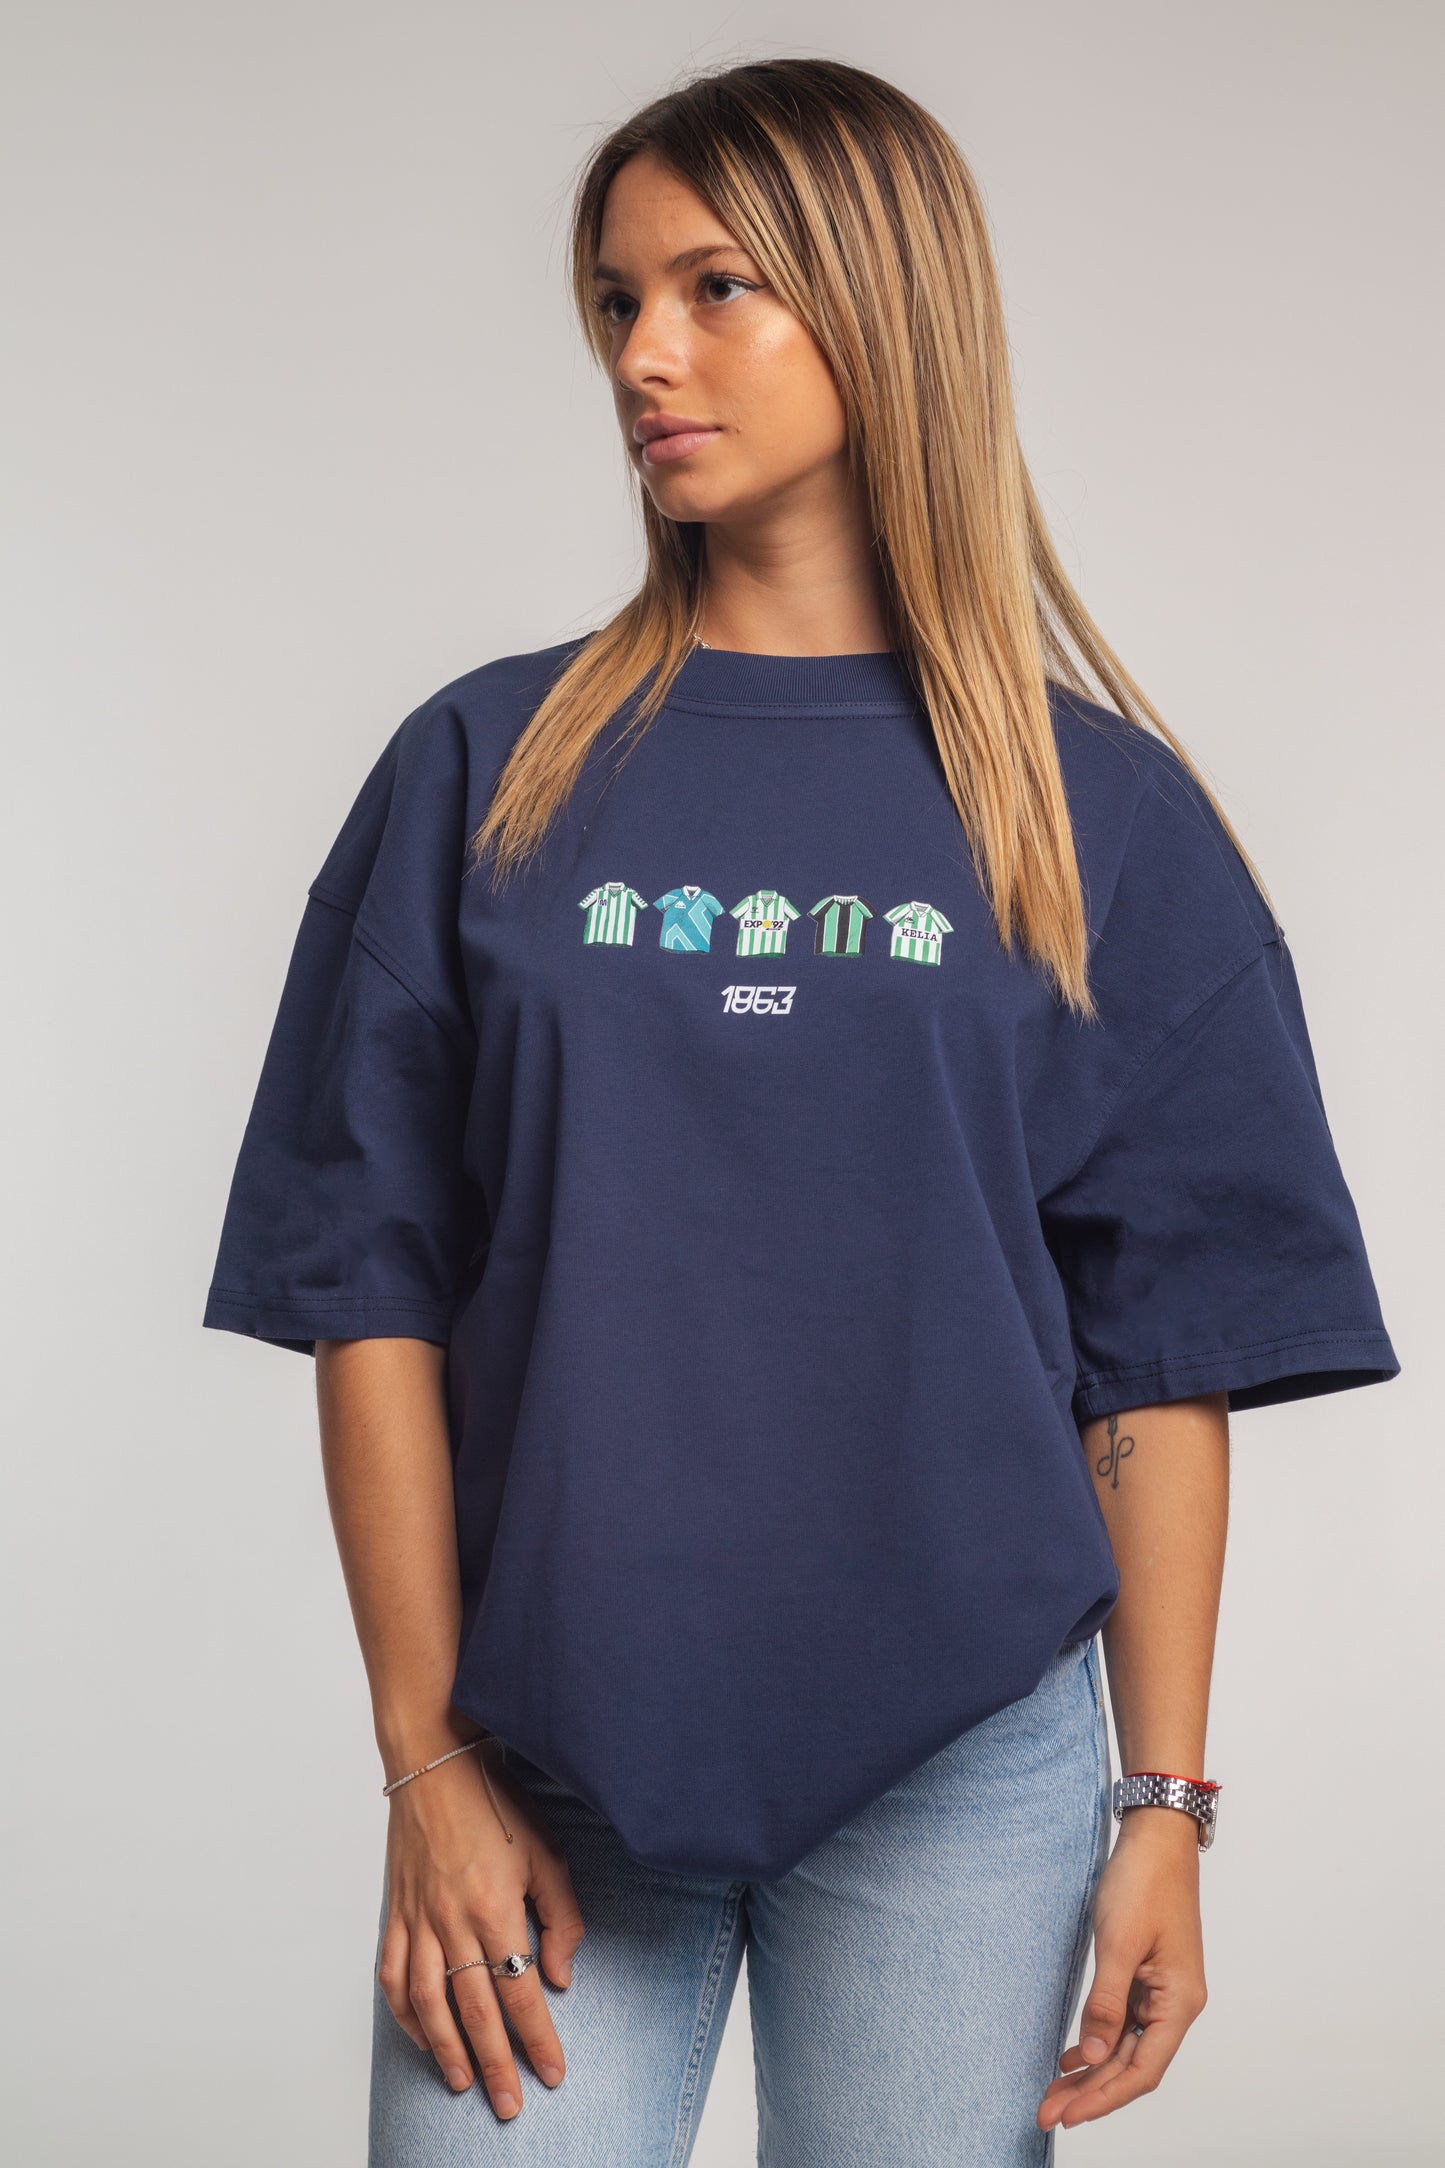 Beticos Historical Kits T-shirt - Navy Blue